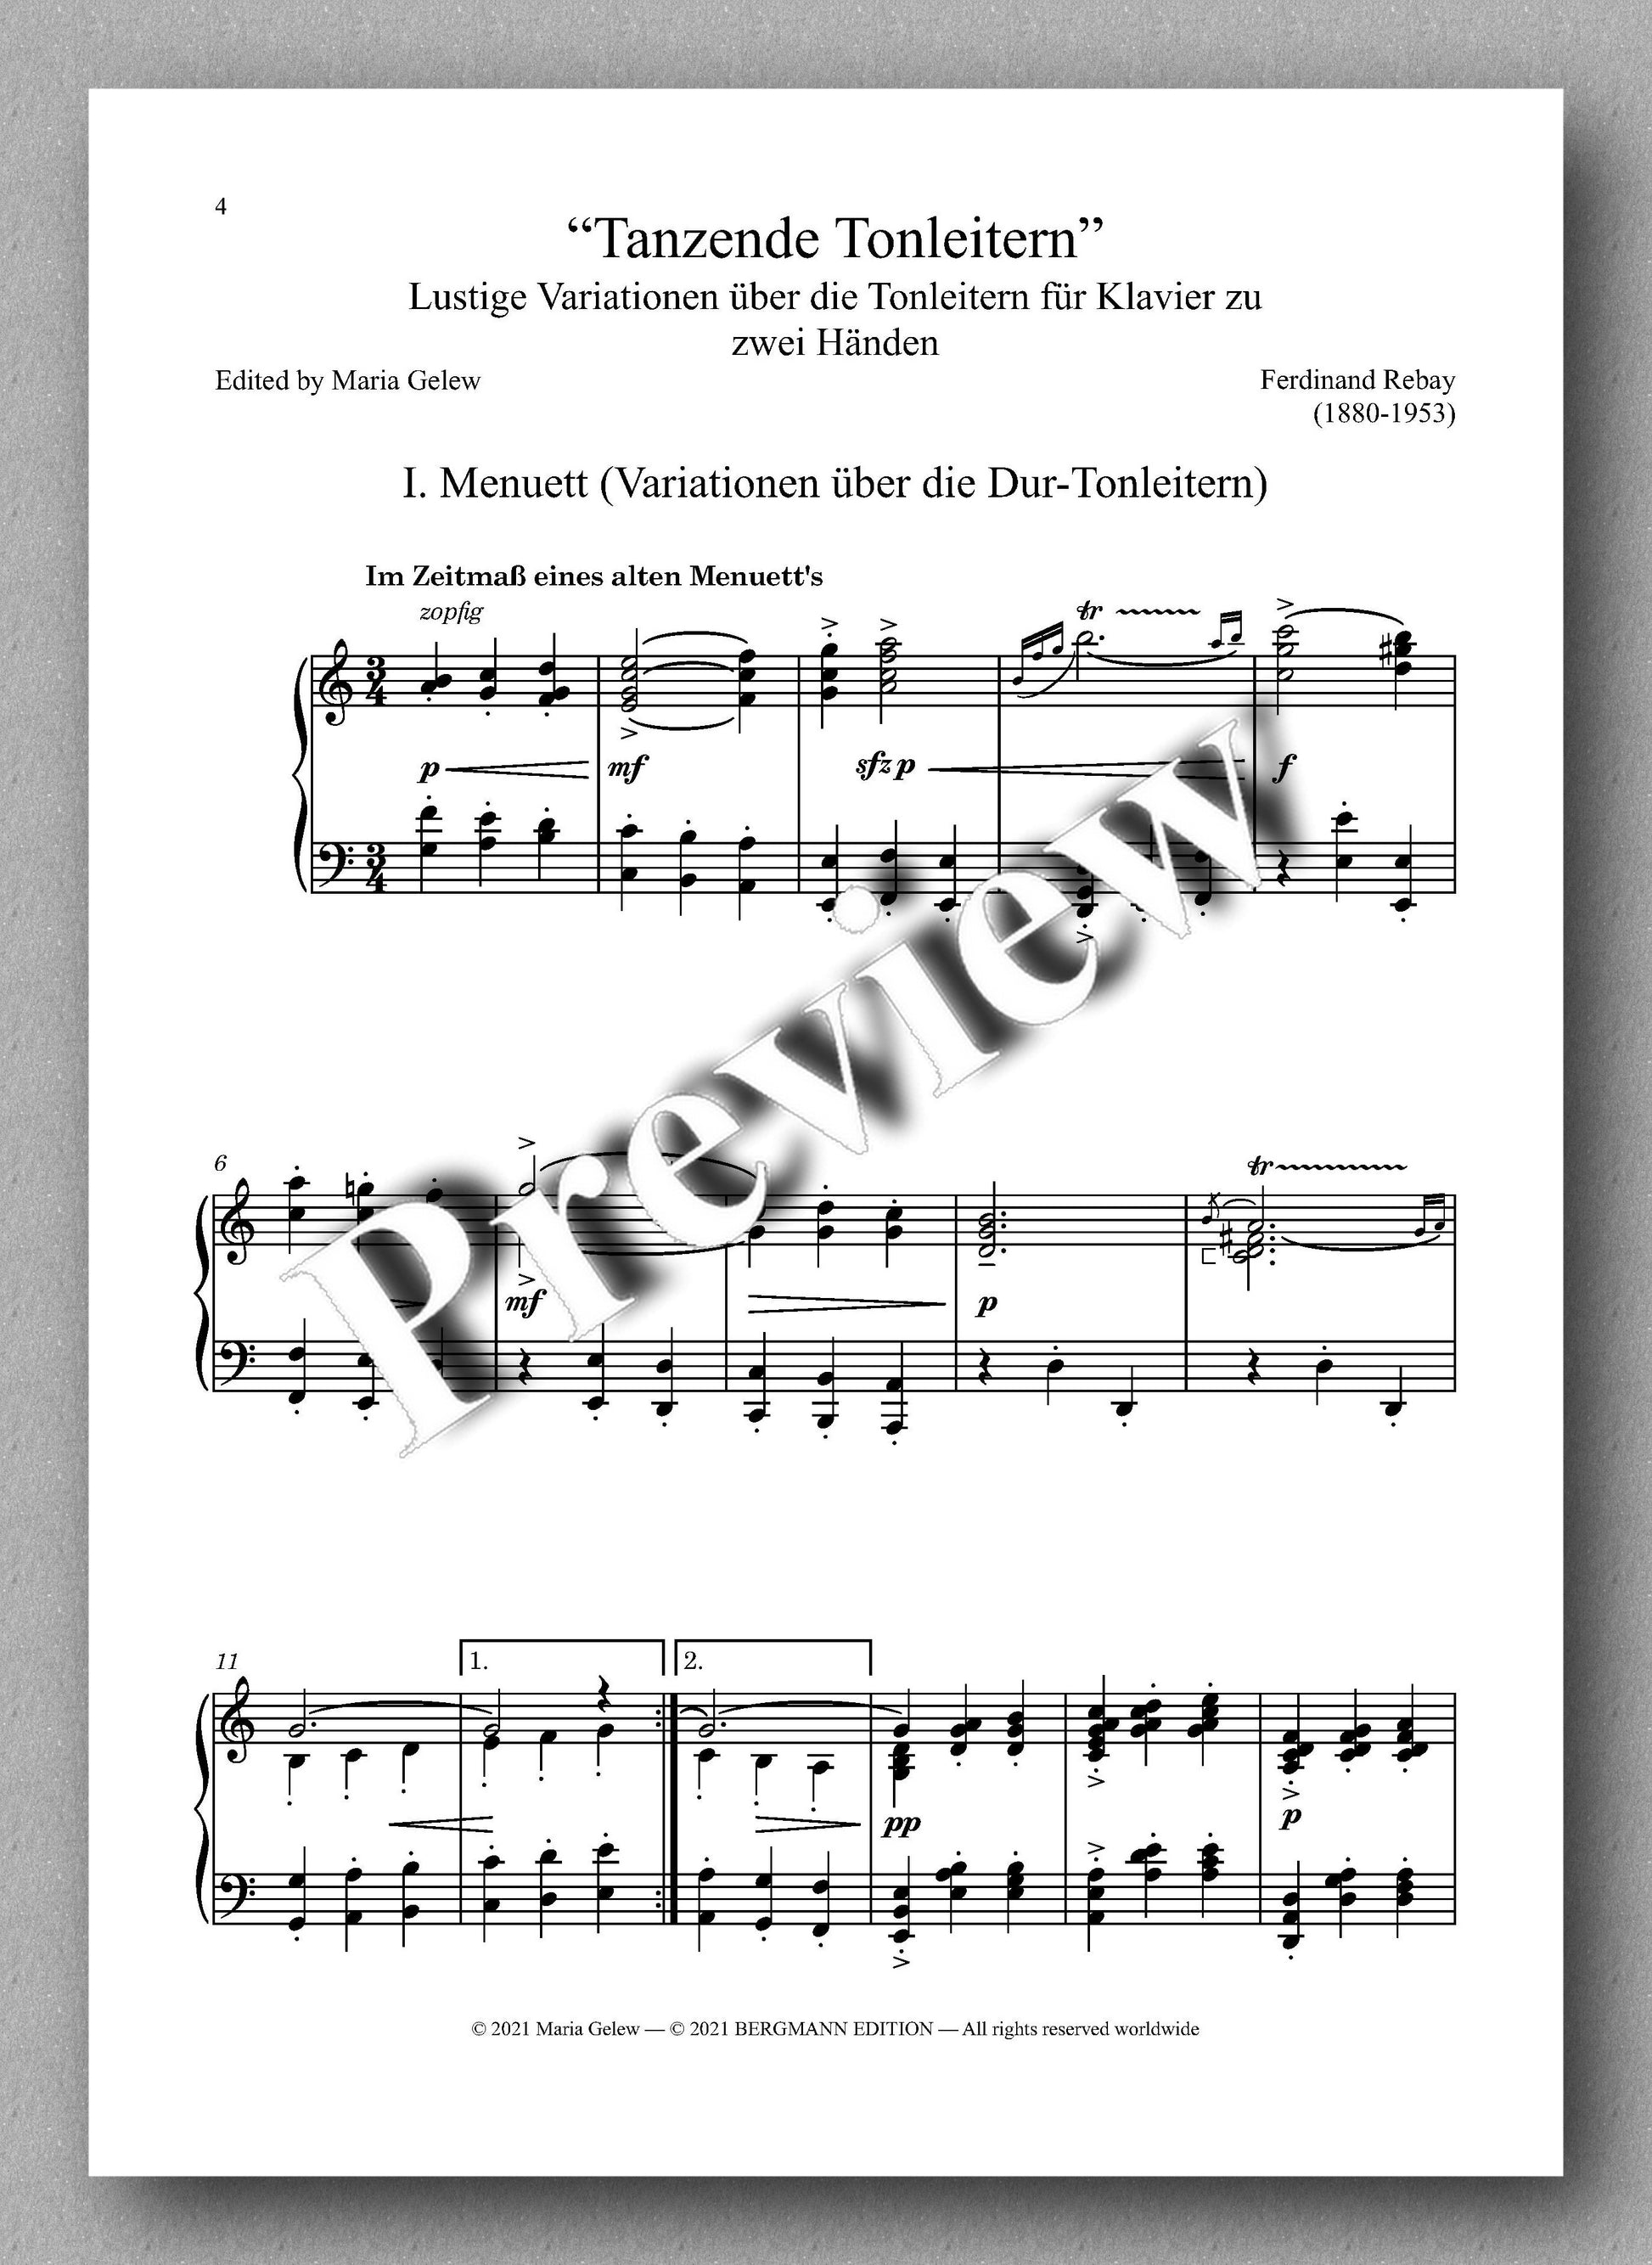 Rebay, Klavier No. 18, Tanzende Tonleitern - music score 1